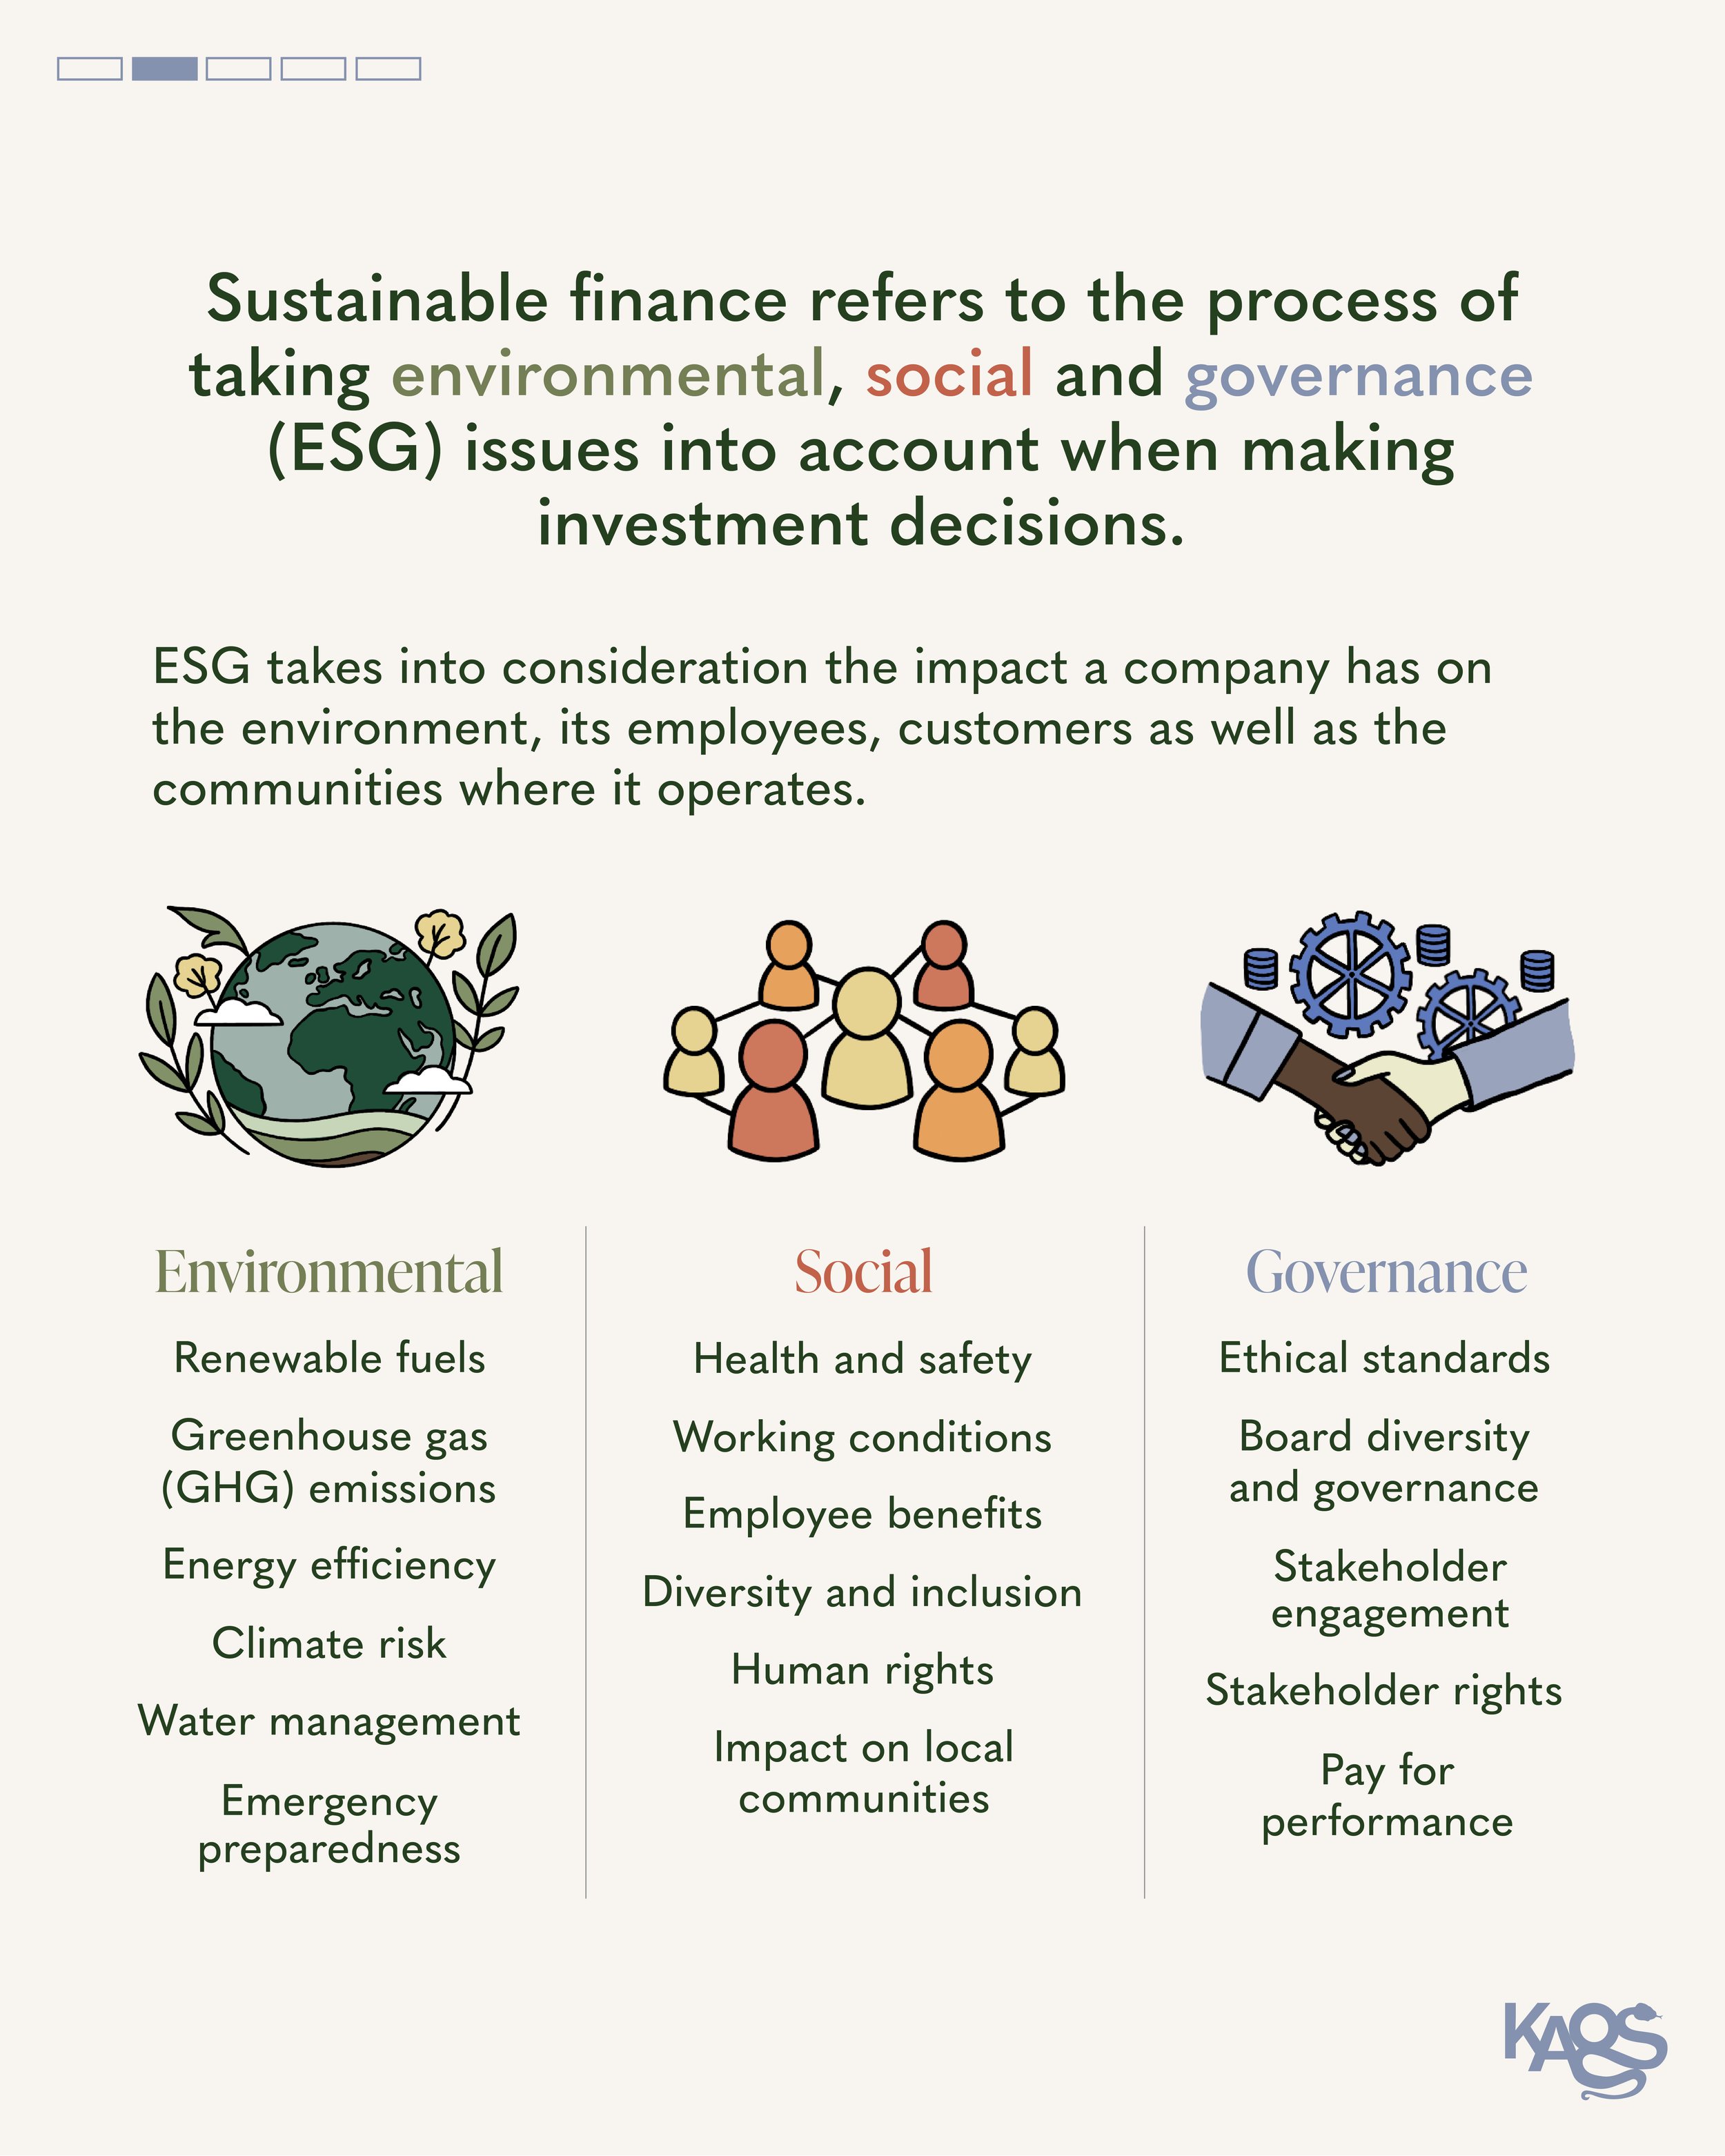 Kaos_Planet_ESG:SustainableFinance_2.jpg